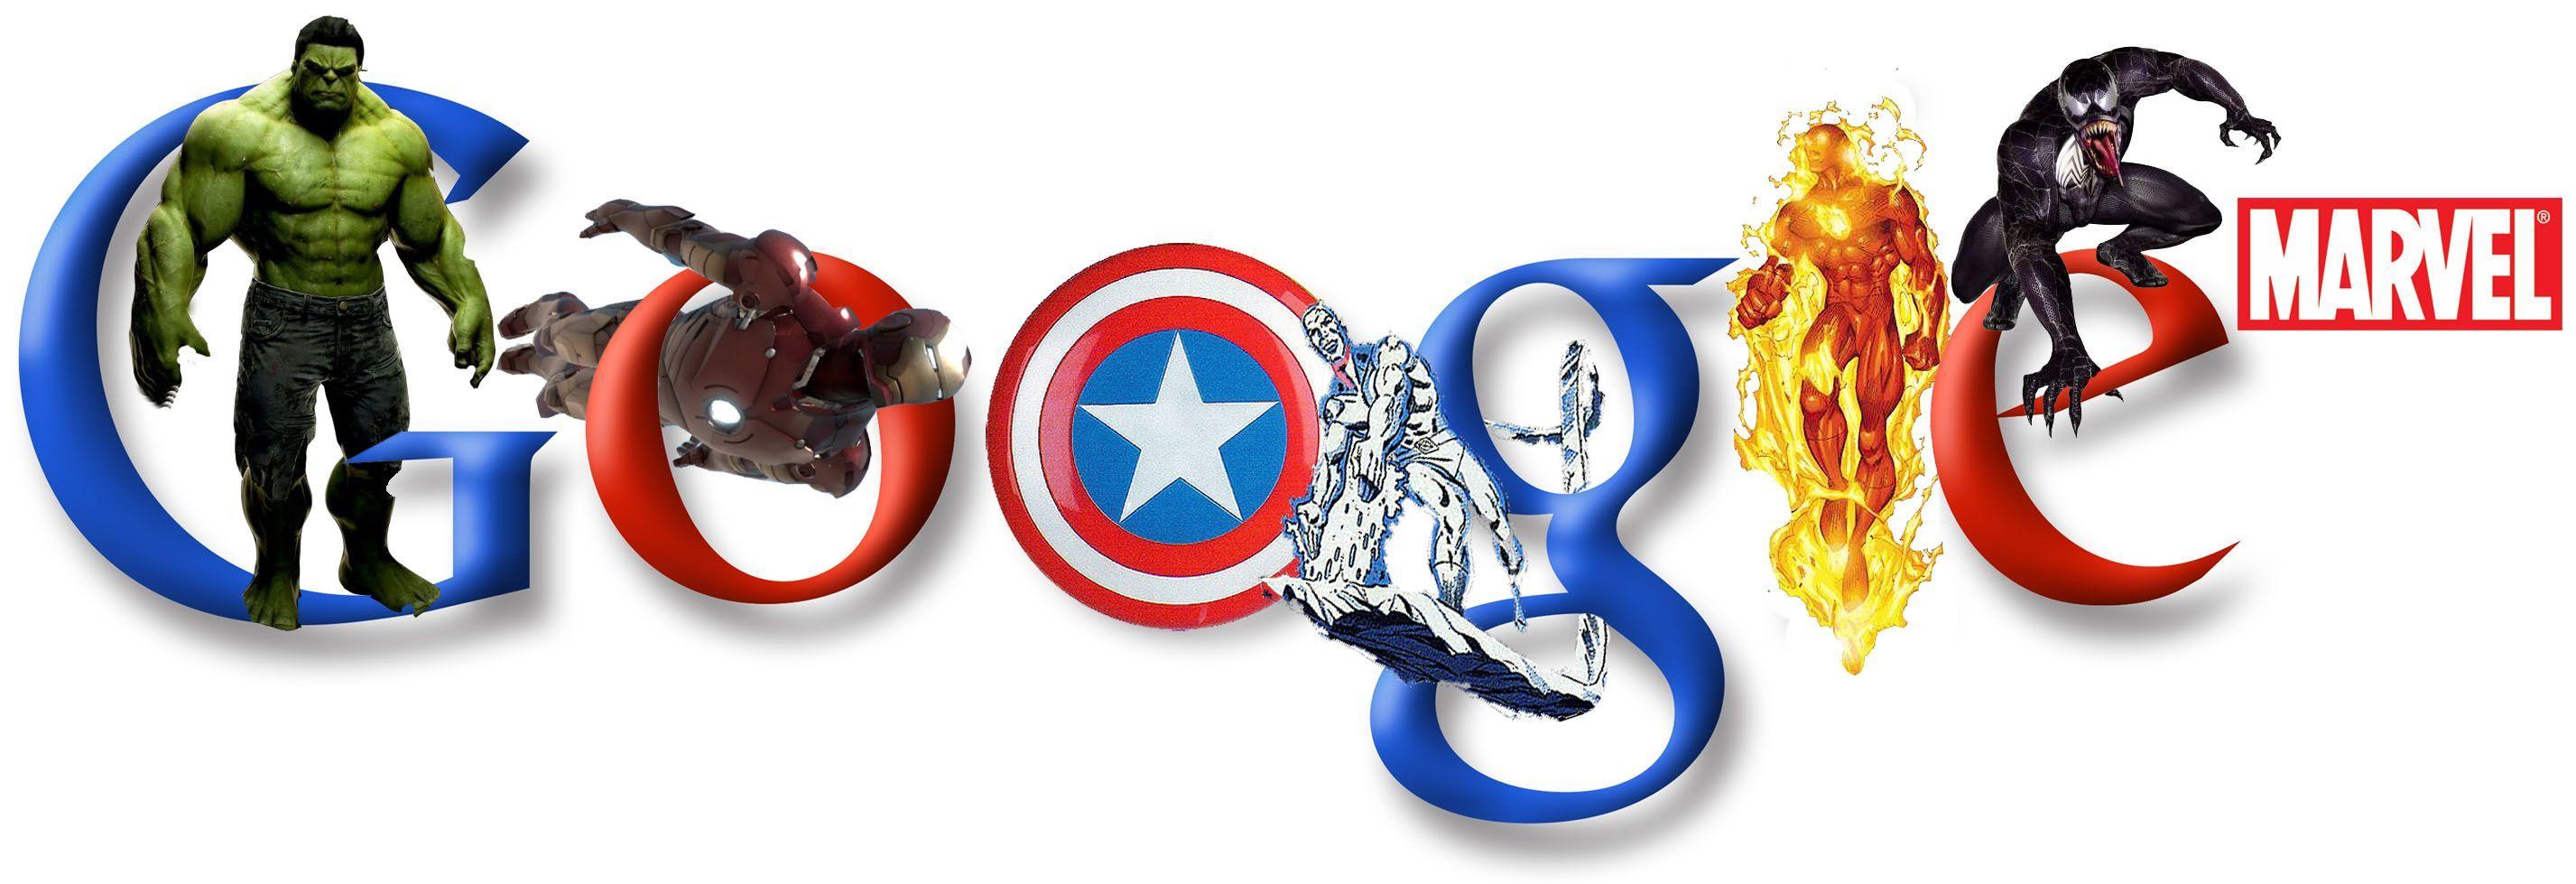 Cool Google Logo - 40+ Outstanding Google Logos (Google Doodles) | google | Pinterest ...